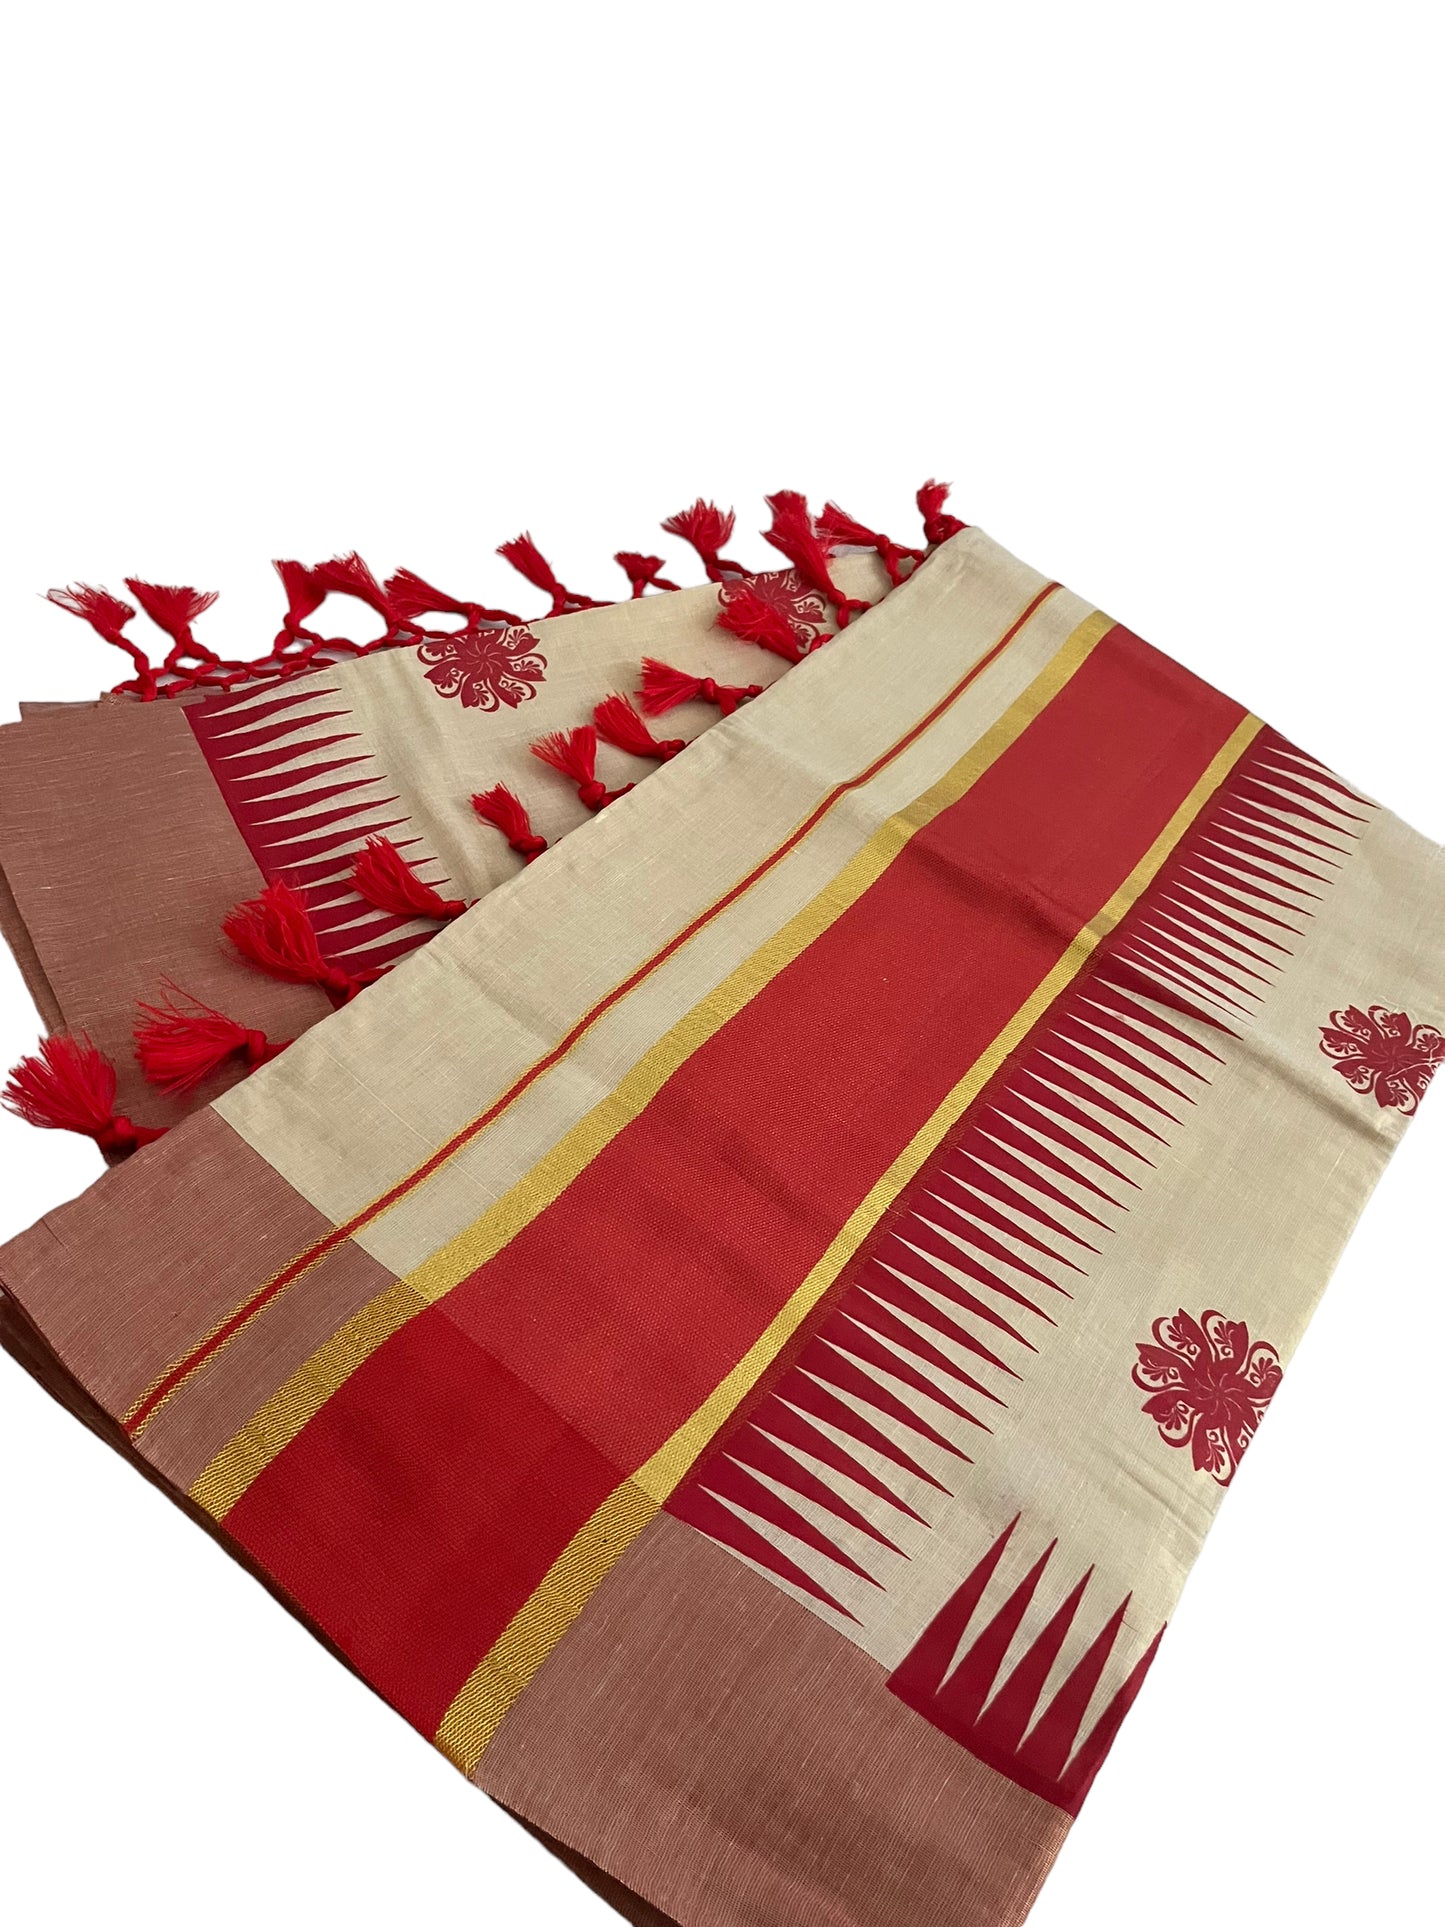 Kerala Saree brown prints in  red and gold kasavu sari| Petelz | Indian sari cotton tissue | red saree with tassels for navratri| Christmas